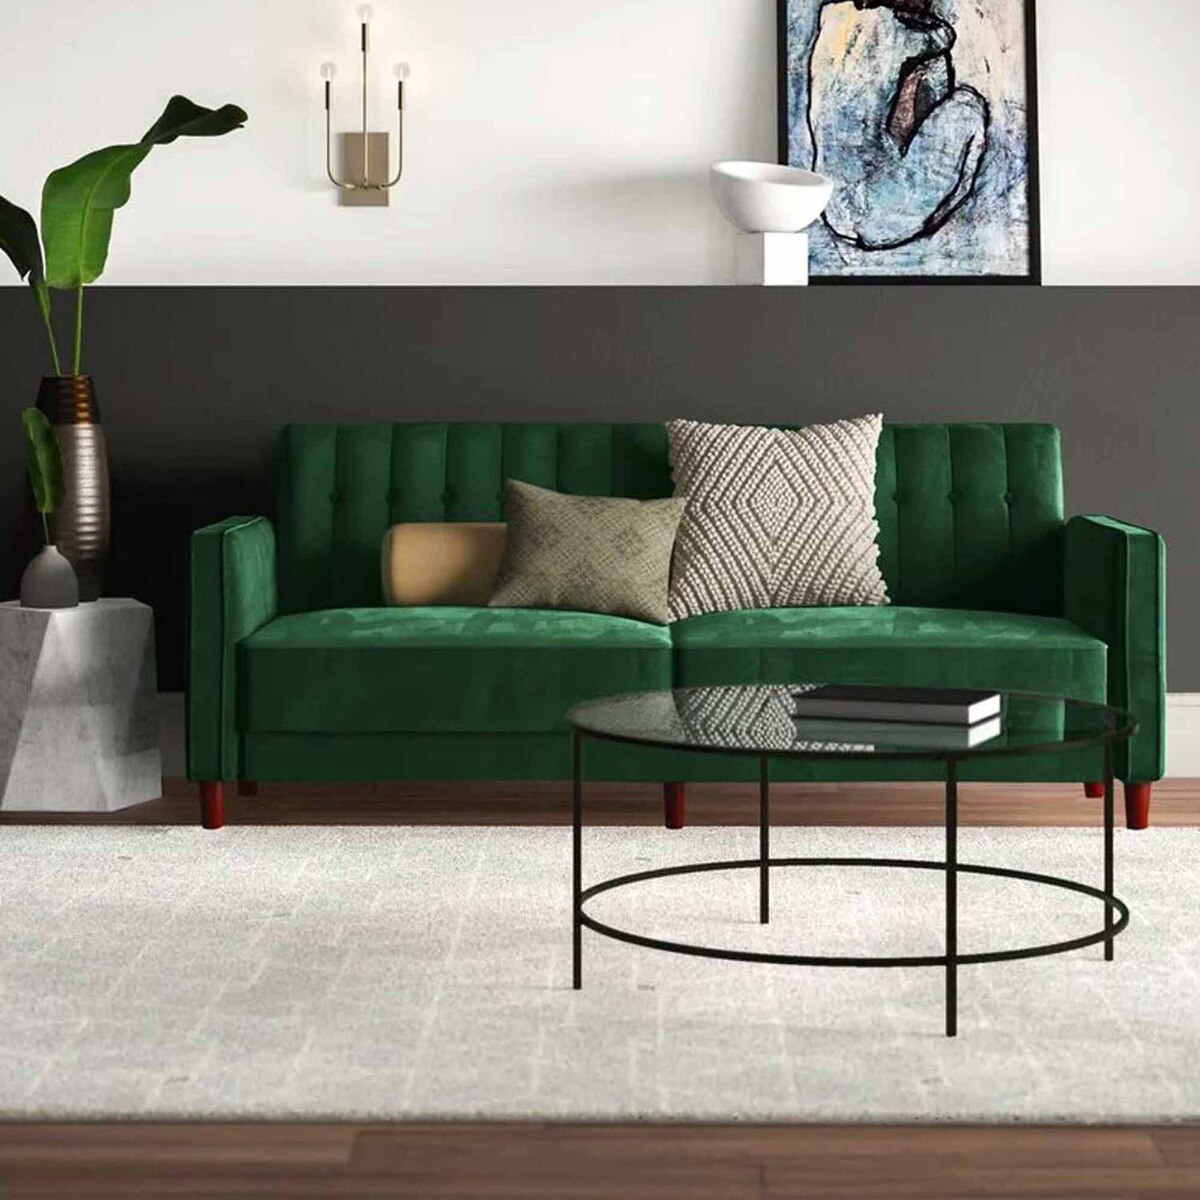 Nobel Comfort, Dark green, 2-Seater Velvet Sofa - Comfy Small Sofas for Living Room, Bedroom, Apartment, Home Office